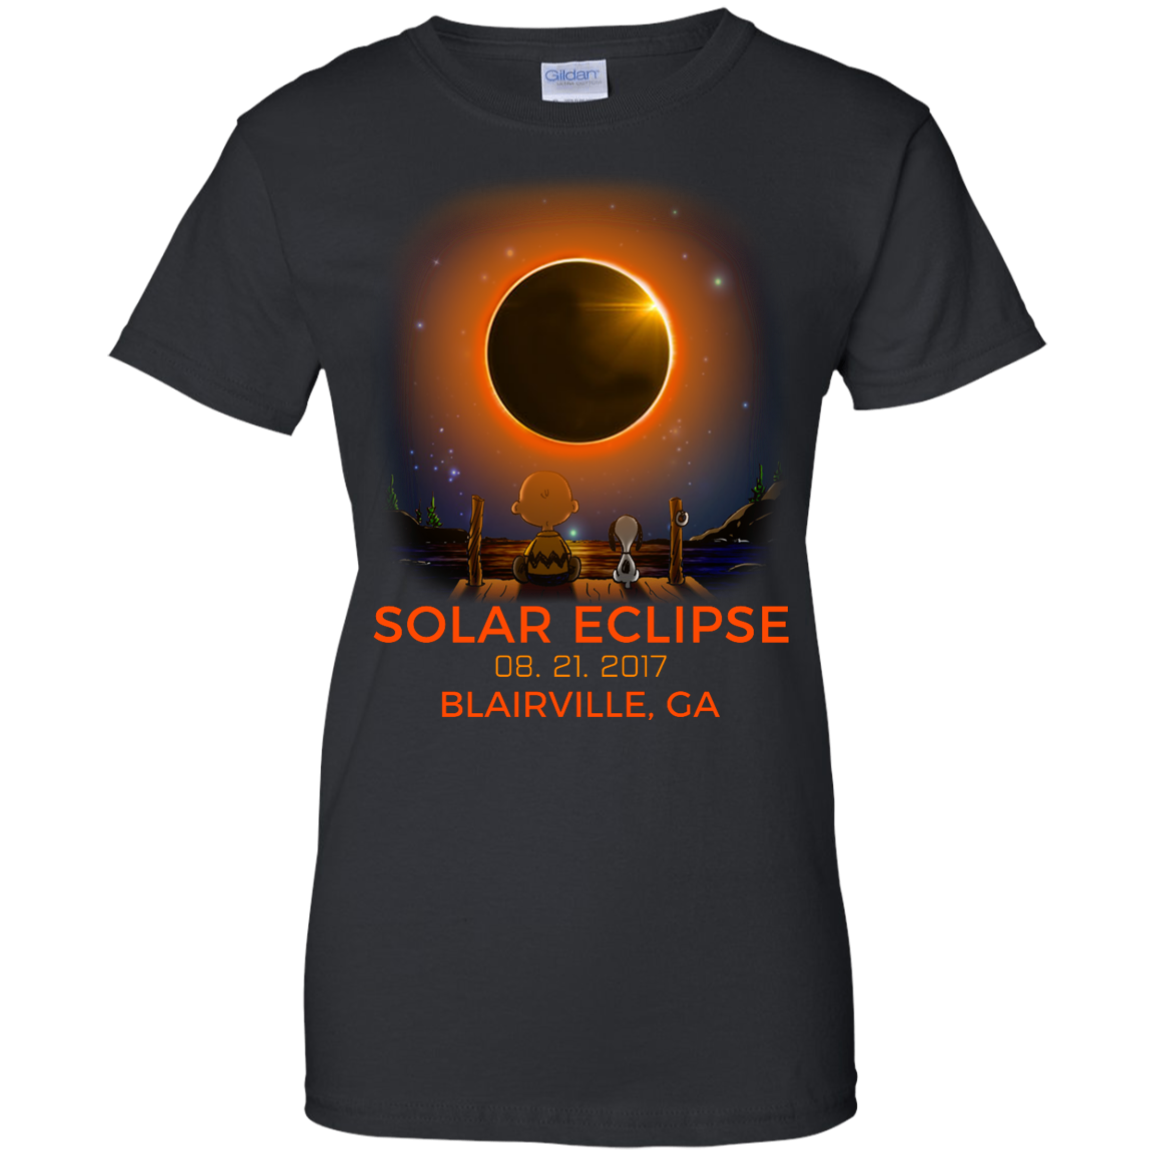 Snoopy solar eclipse - Blairsville - Total solar eclipse 2017 shirt ...